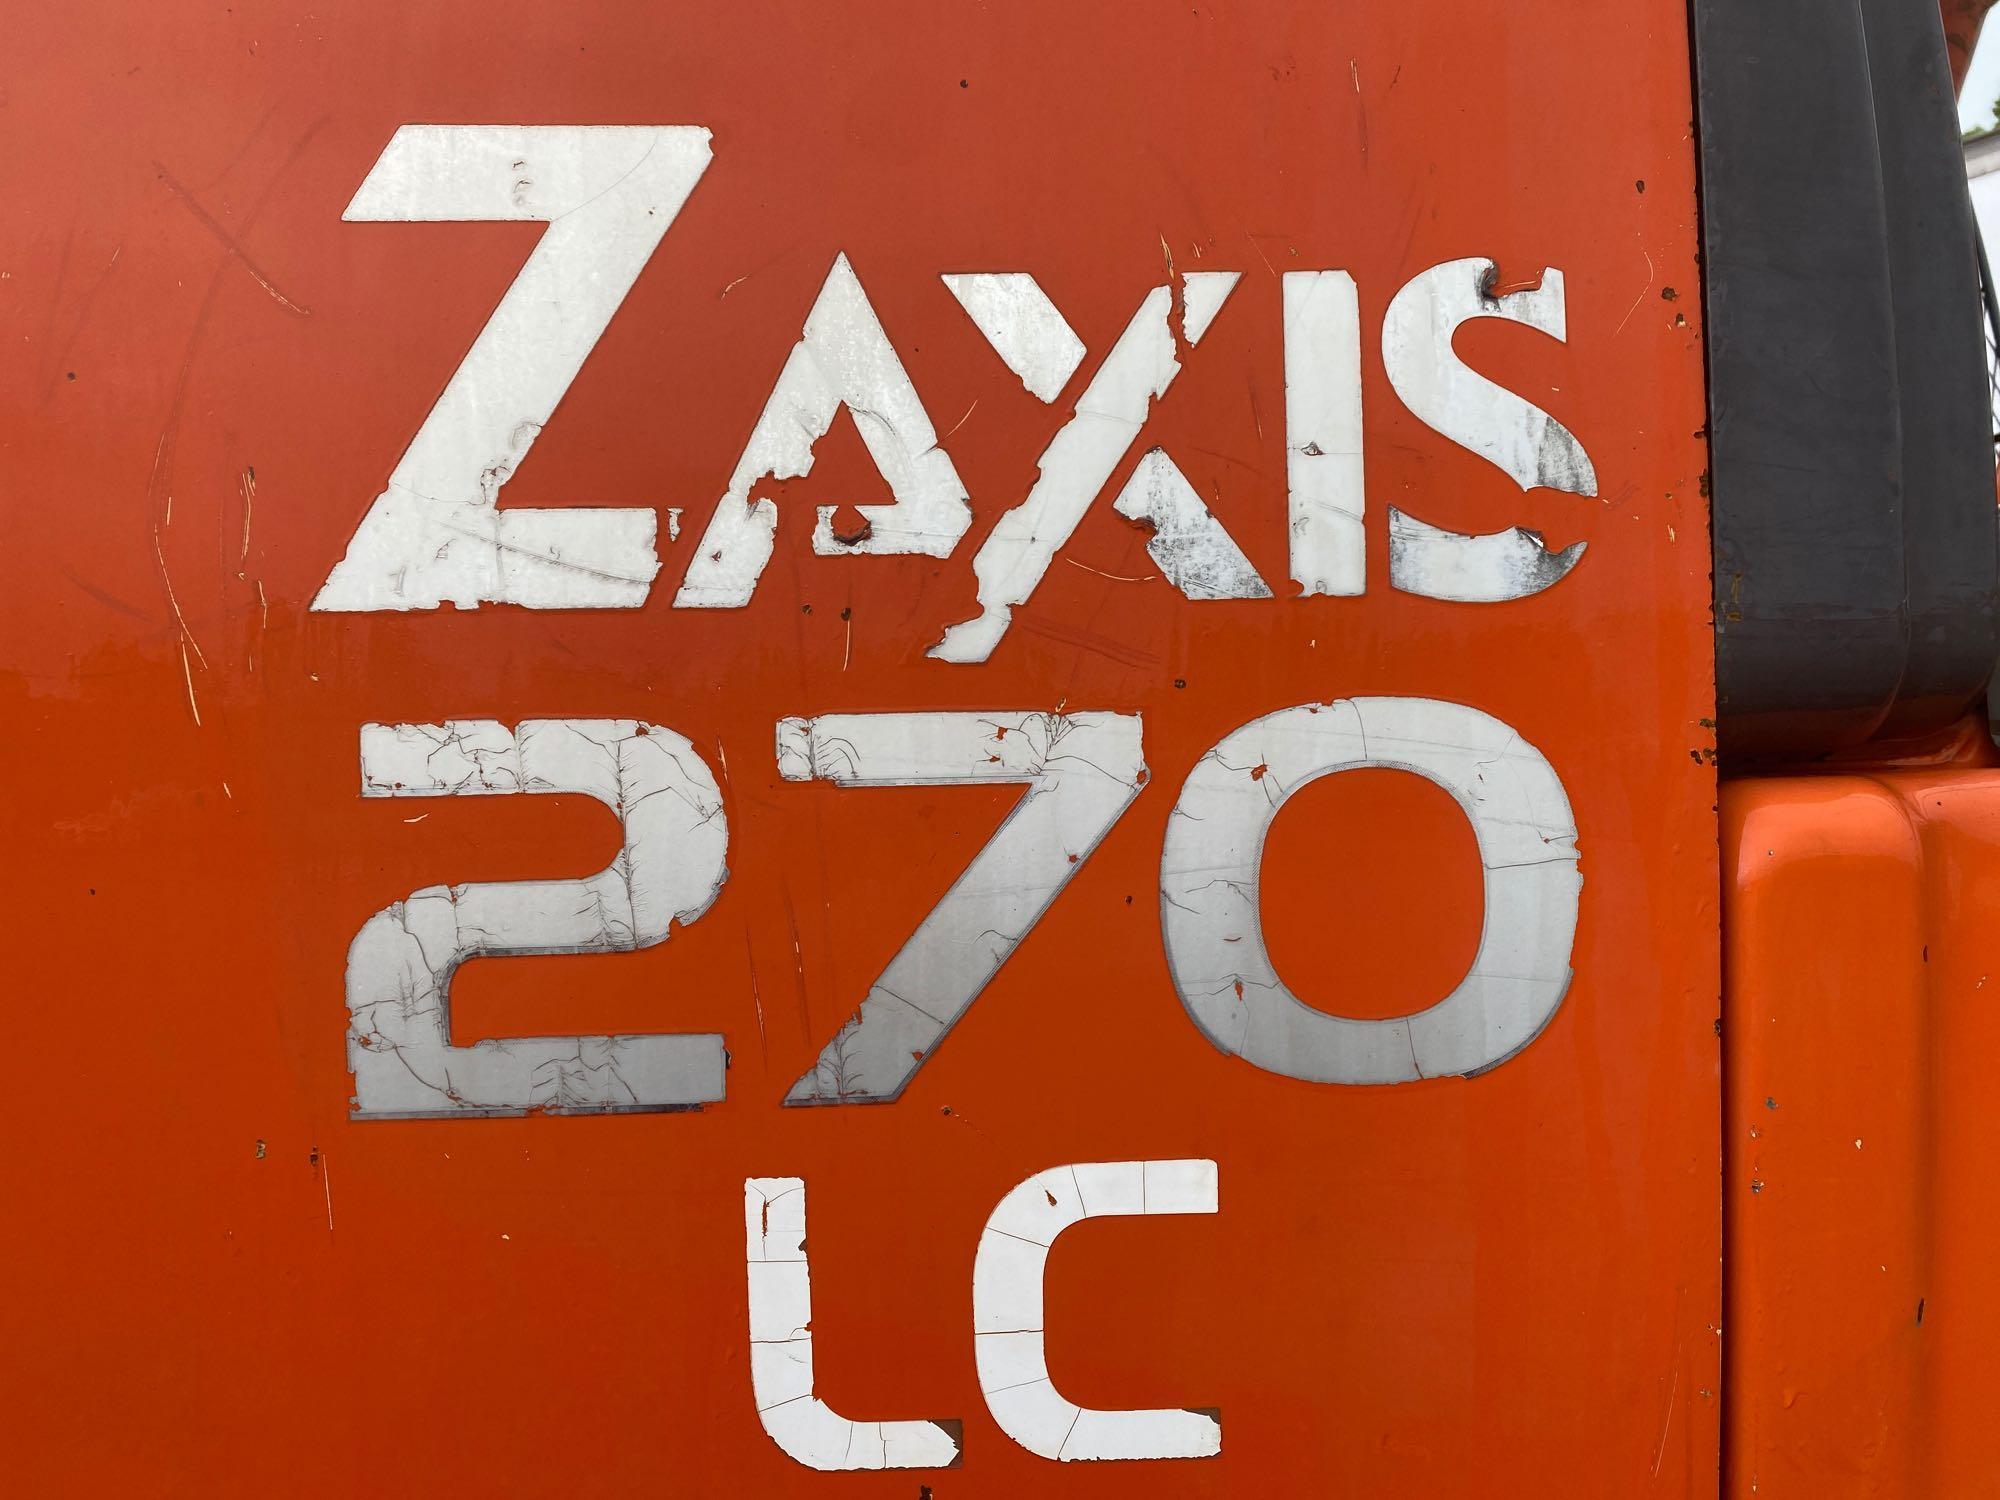 2003 Hitachi ZX270 LC Hydraulic Excavator